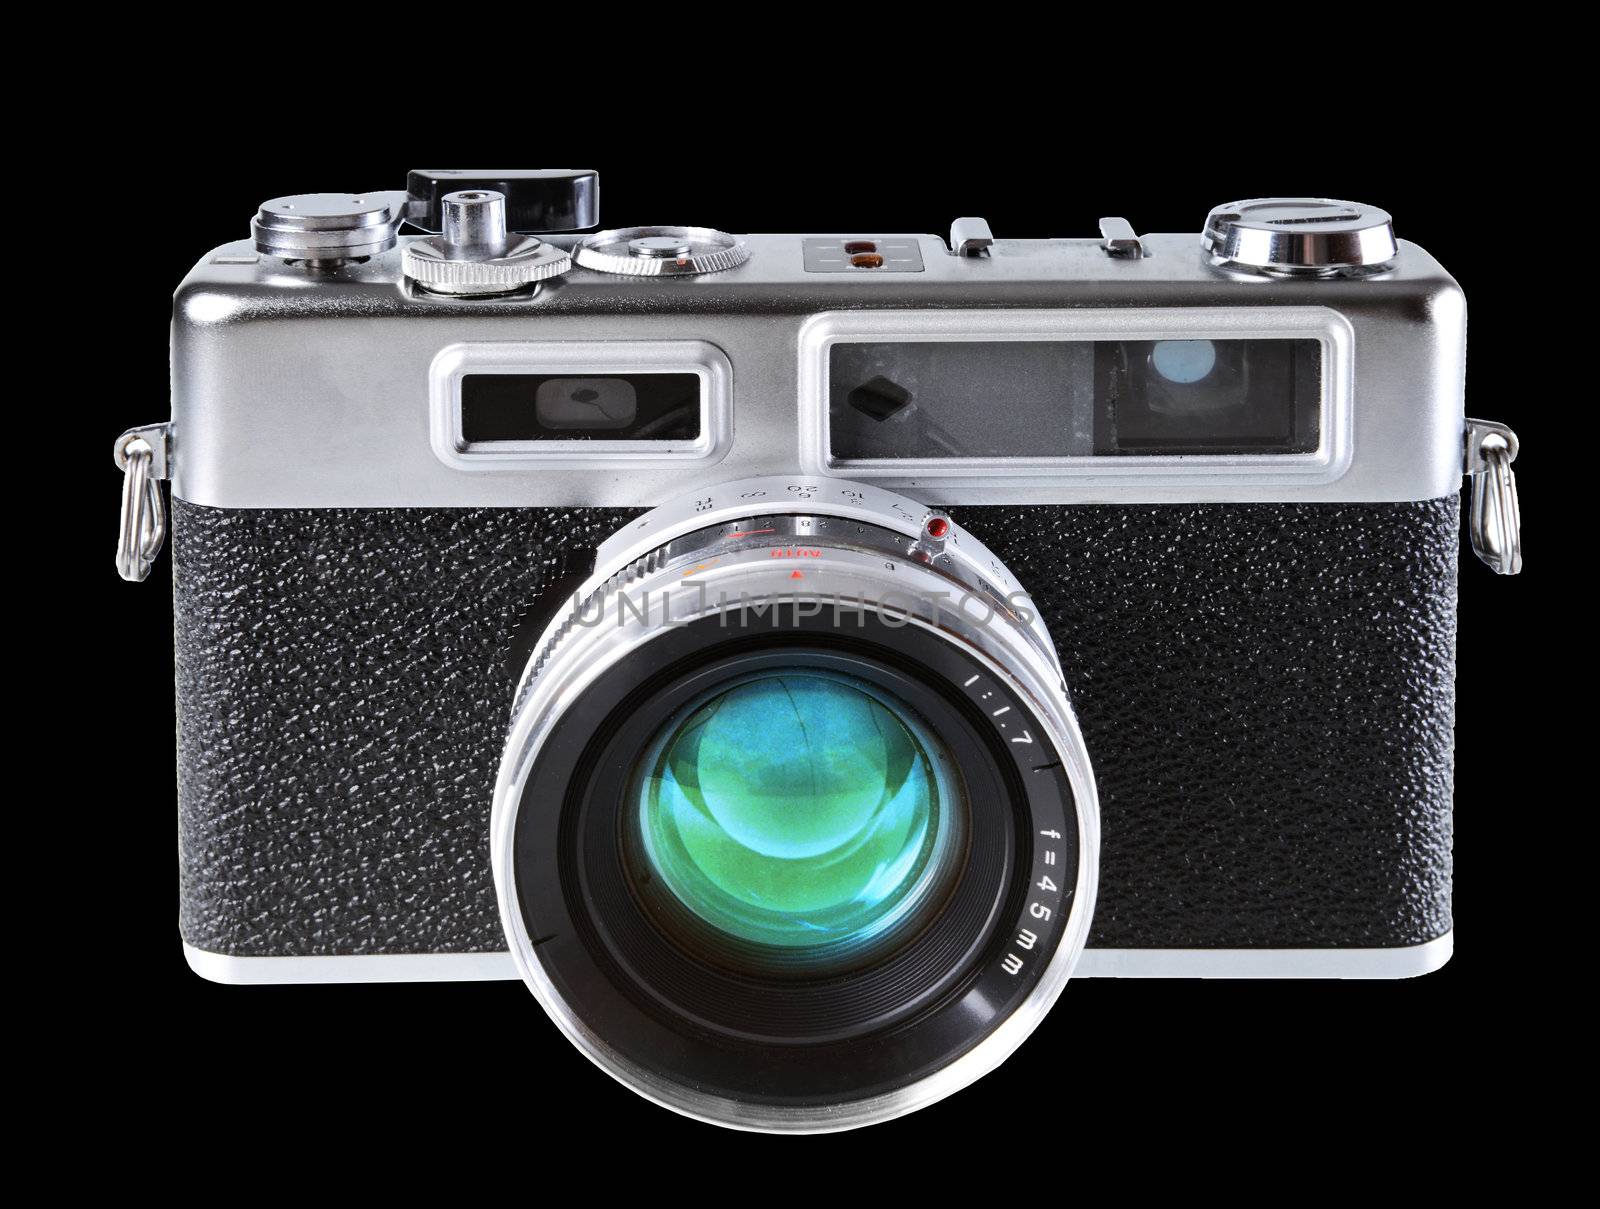 Vintage film rangefinder camera isolated on white background